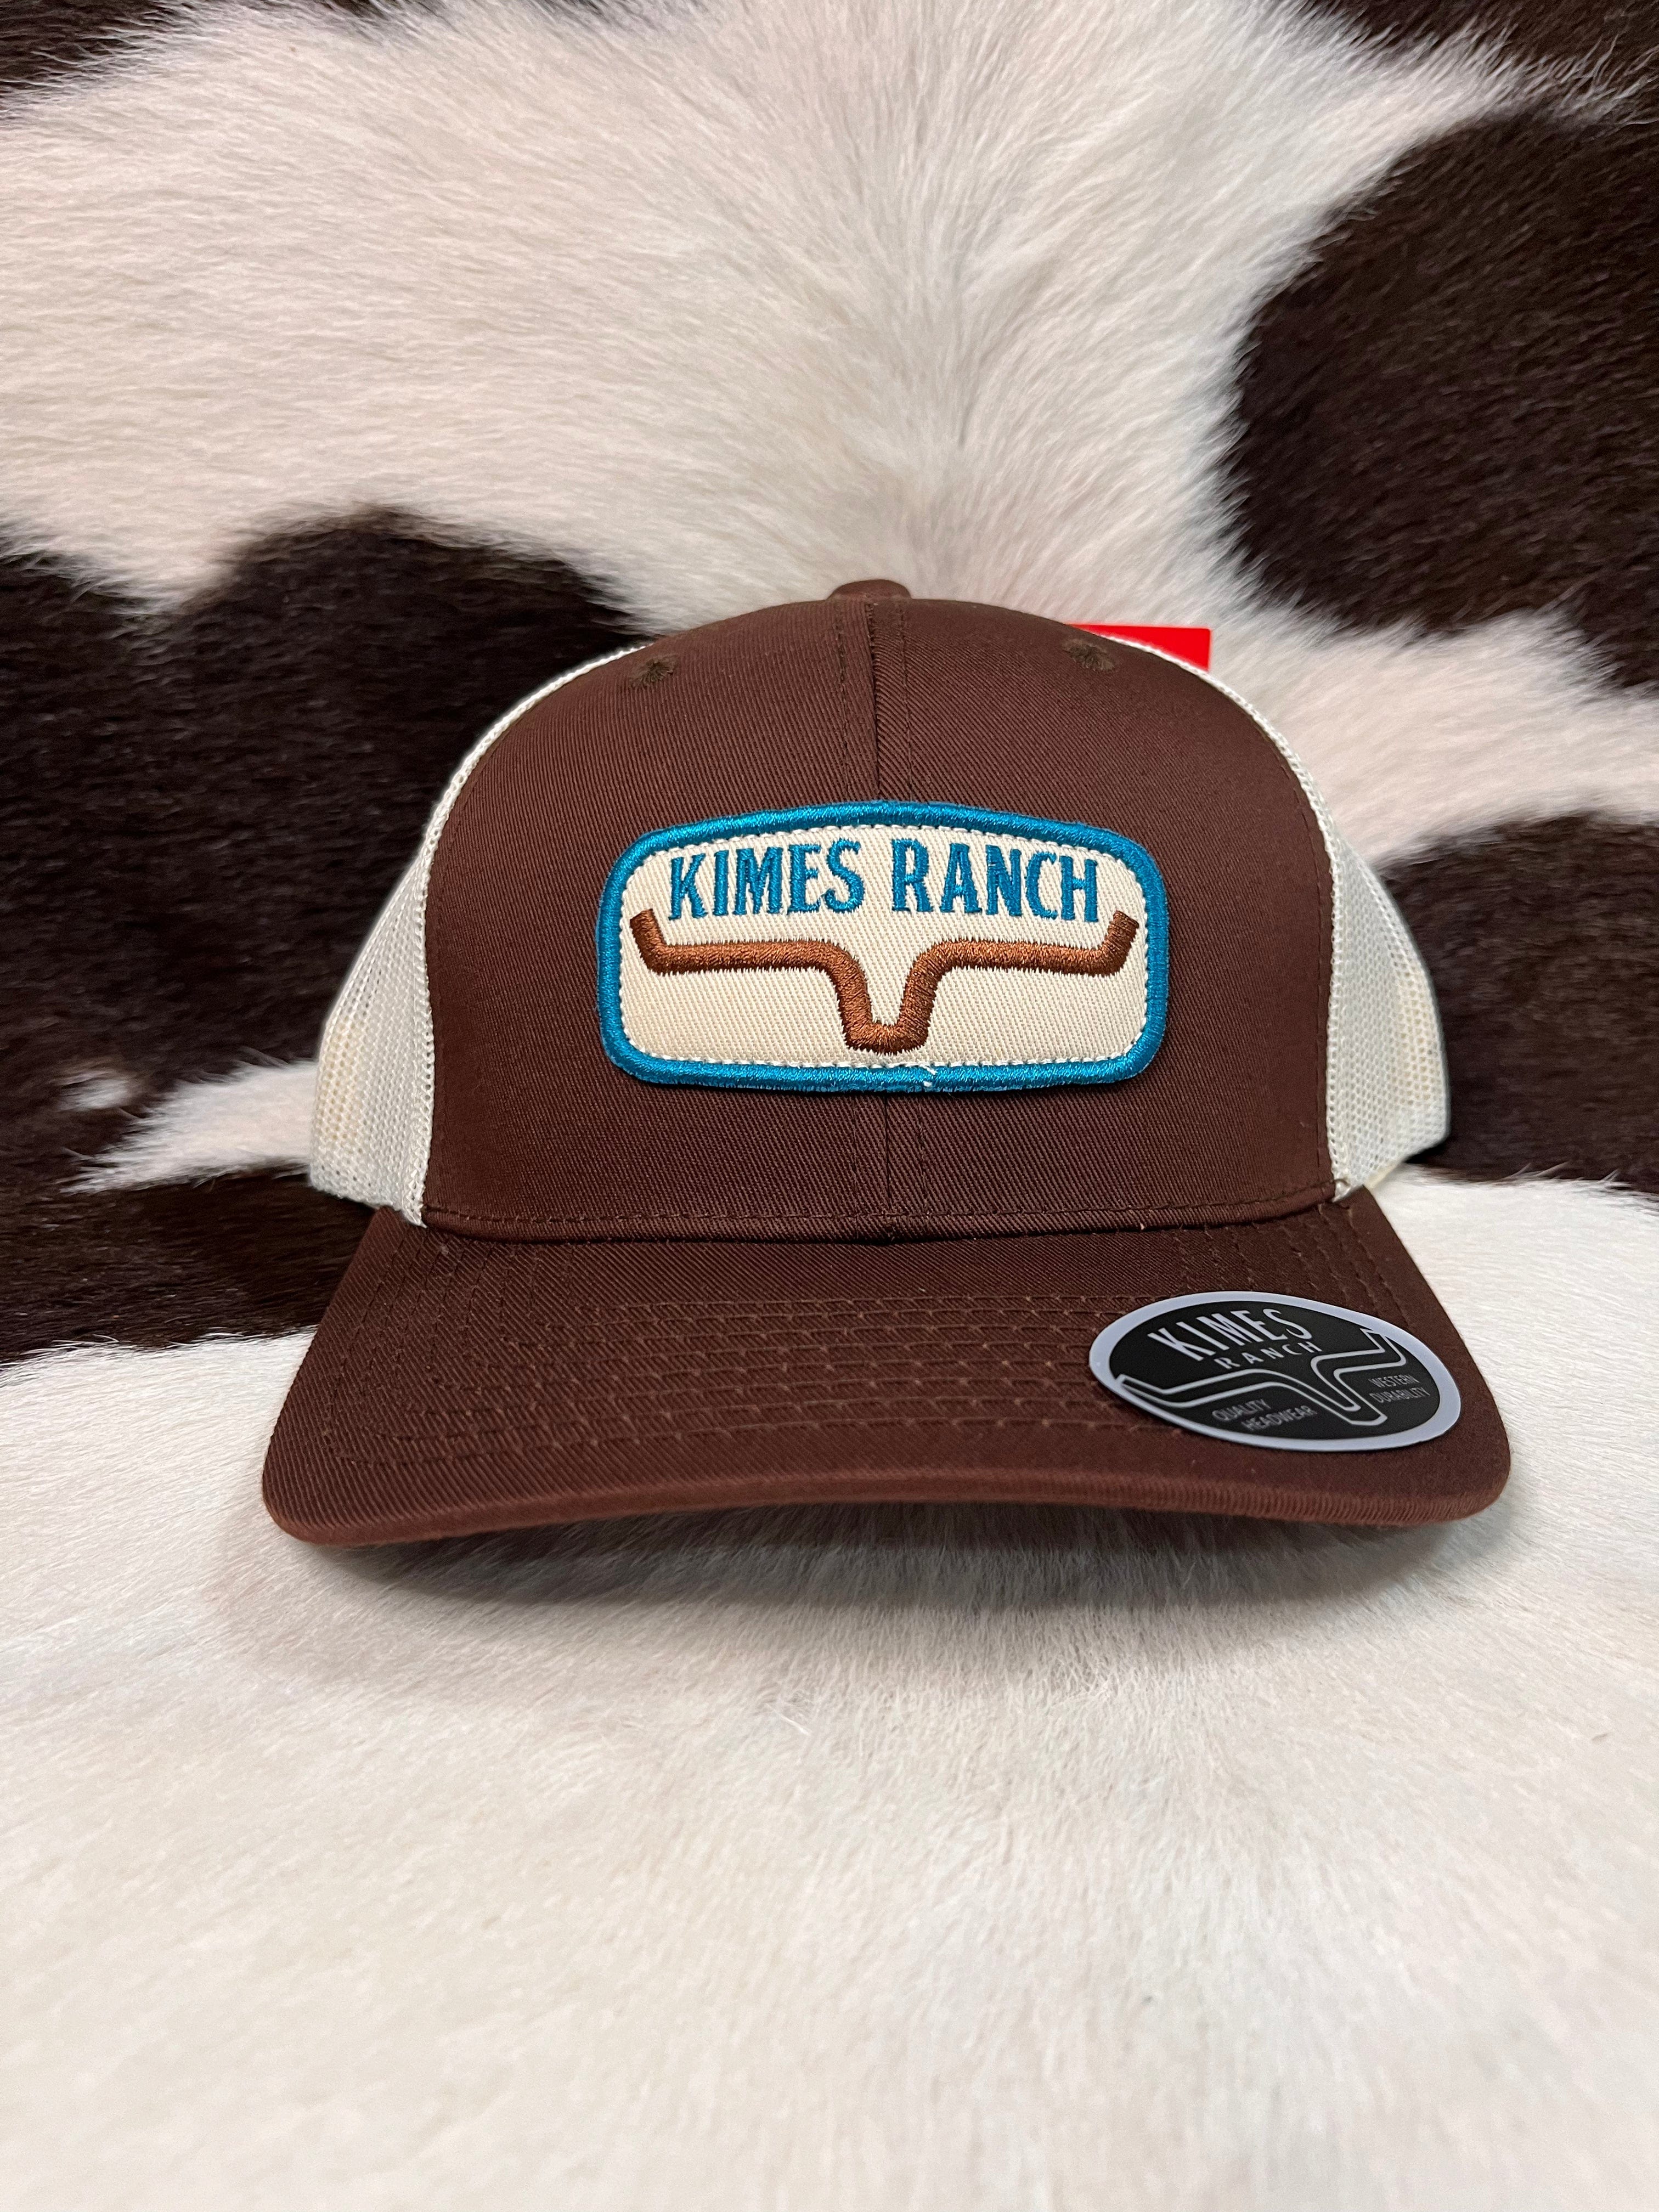 Kimes Ranch Rolling Trucker Cap Brown